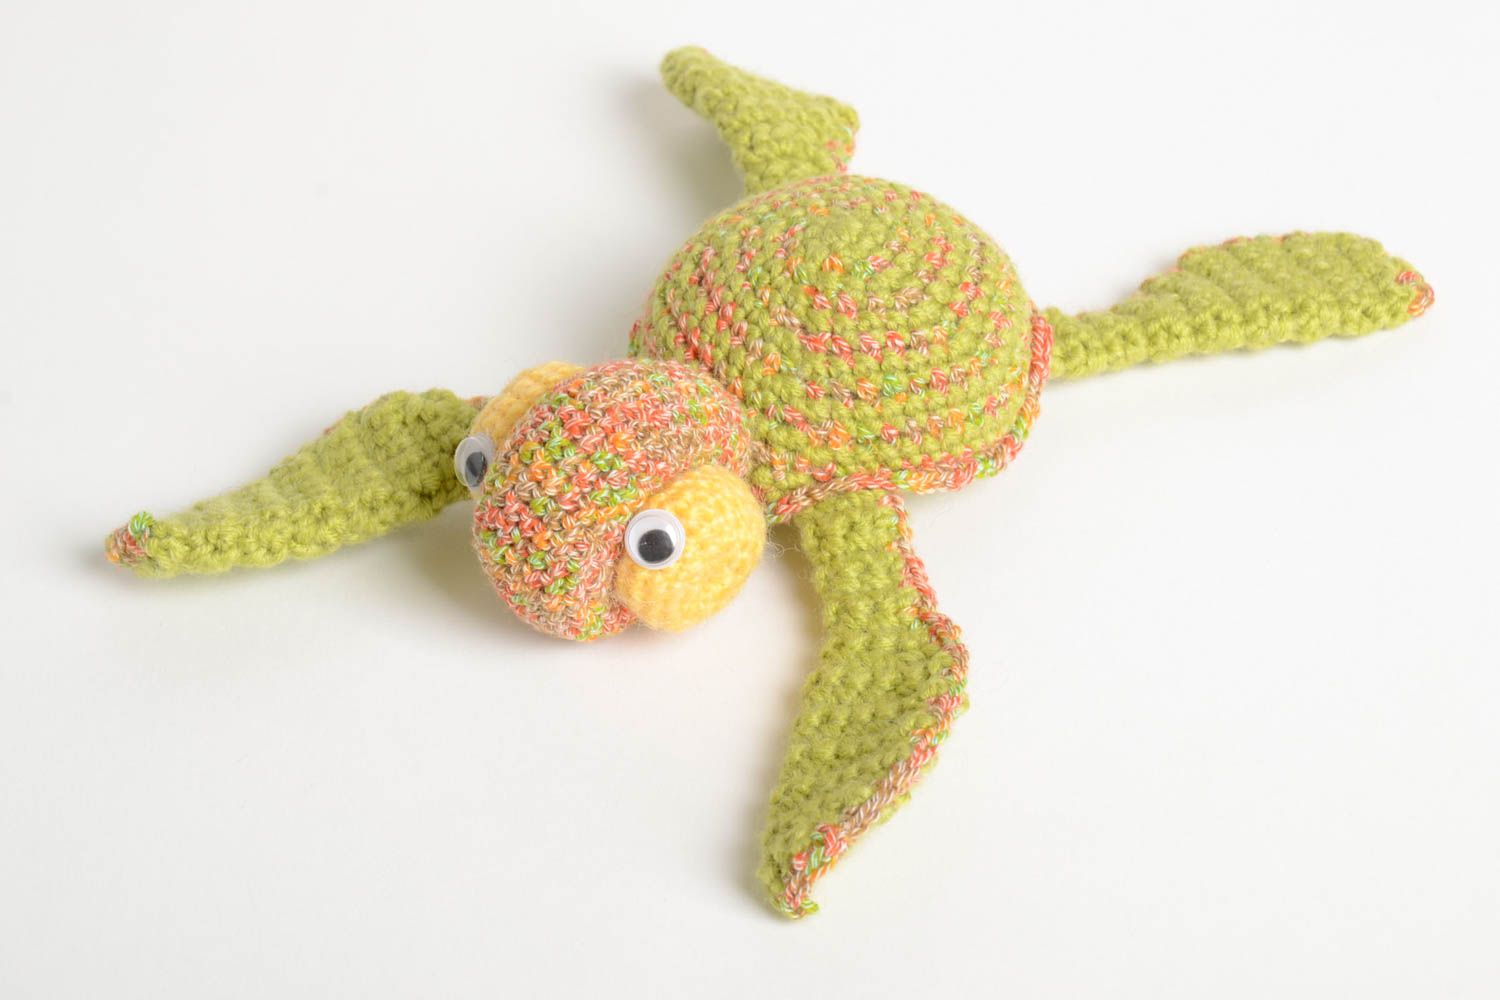 Unusual handmade crochet soft toy stuffed toy turtle room decor ideas photo 2